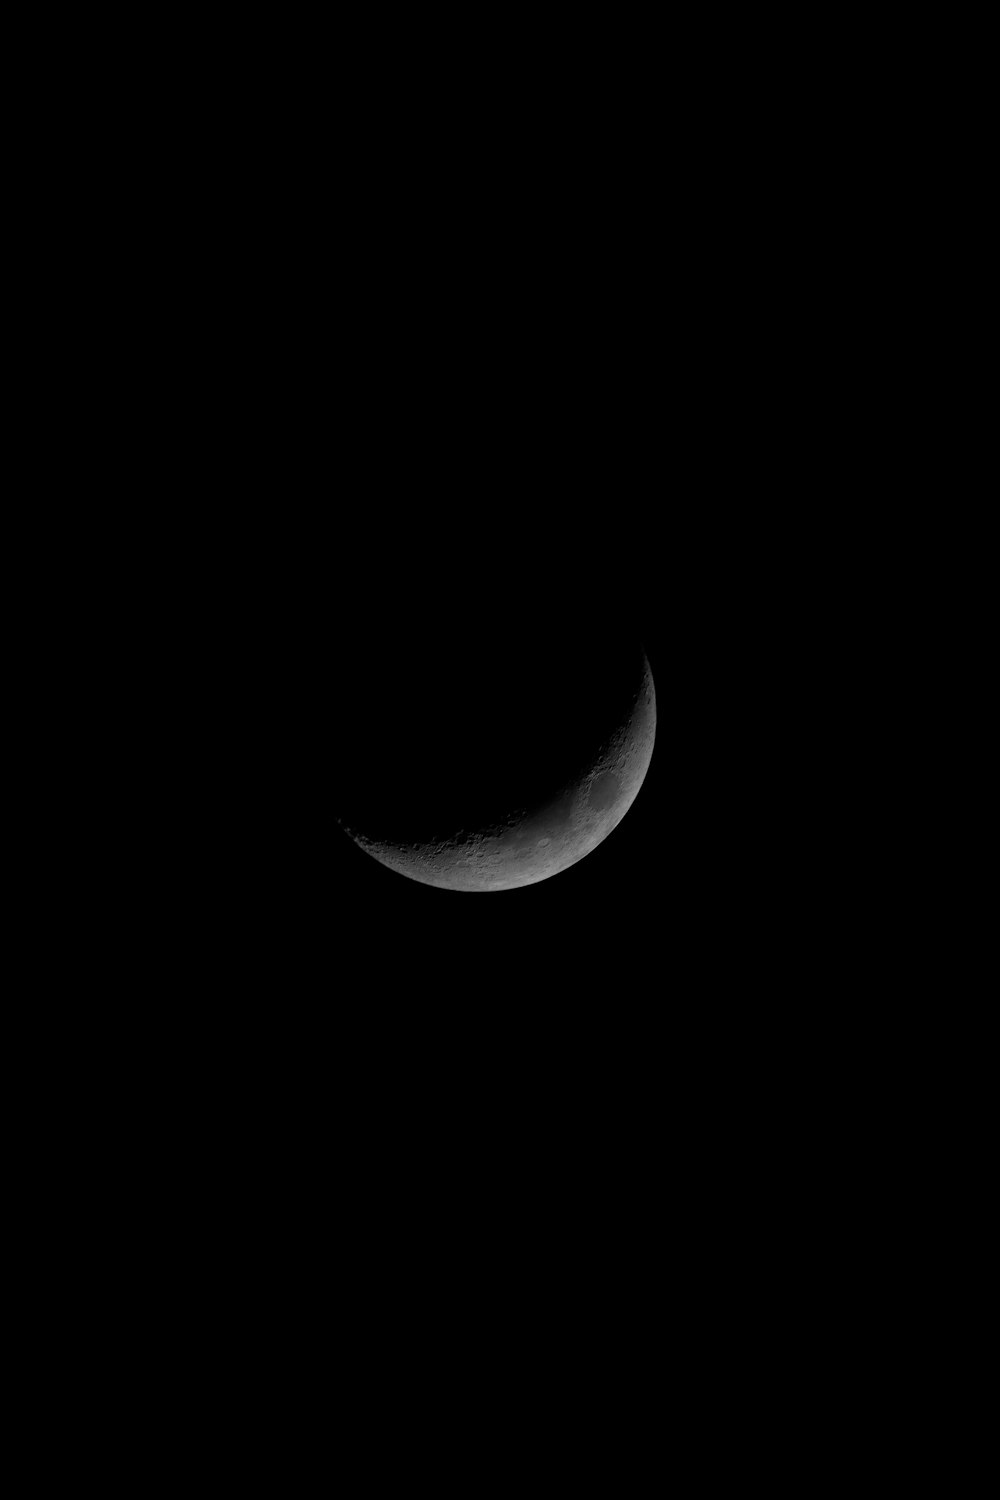 Una falce di luna si vede nel cielo scuro